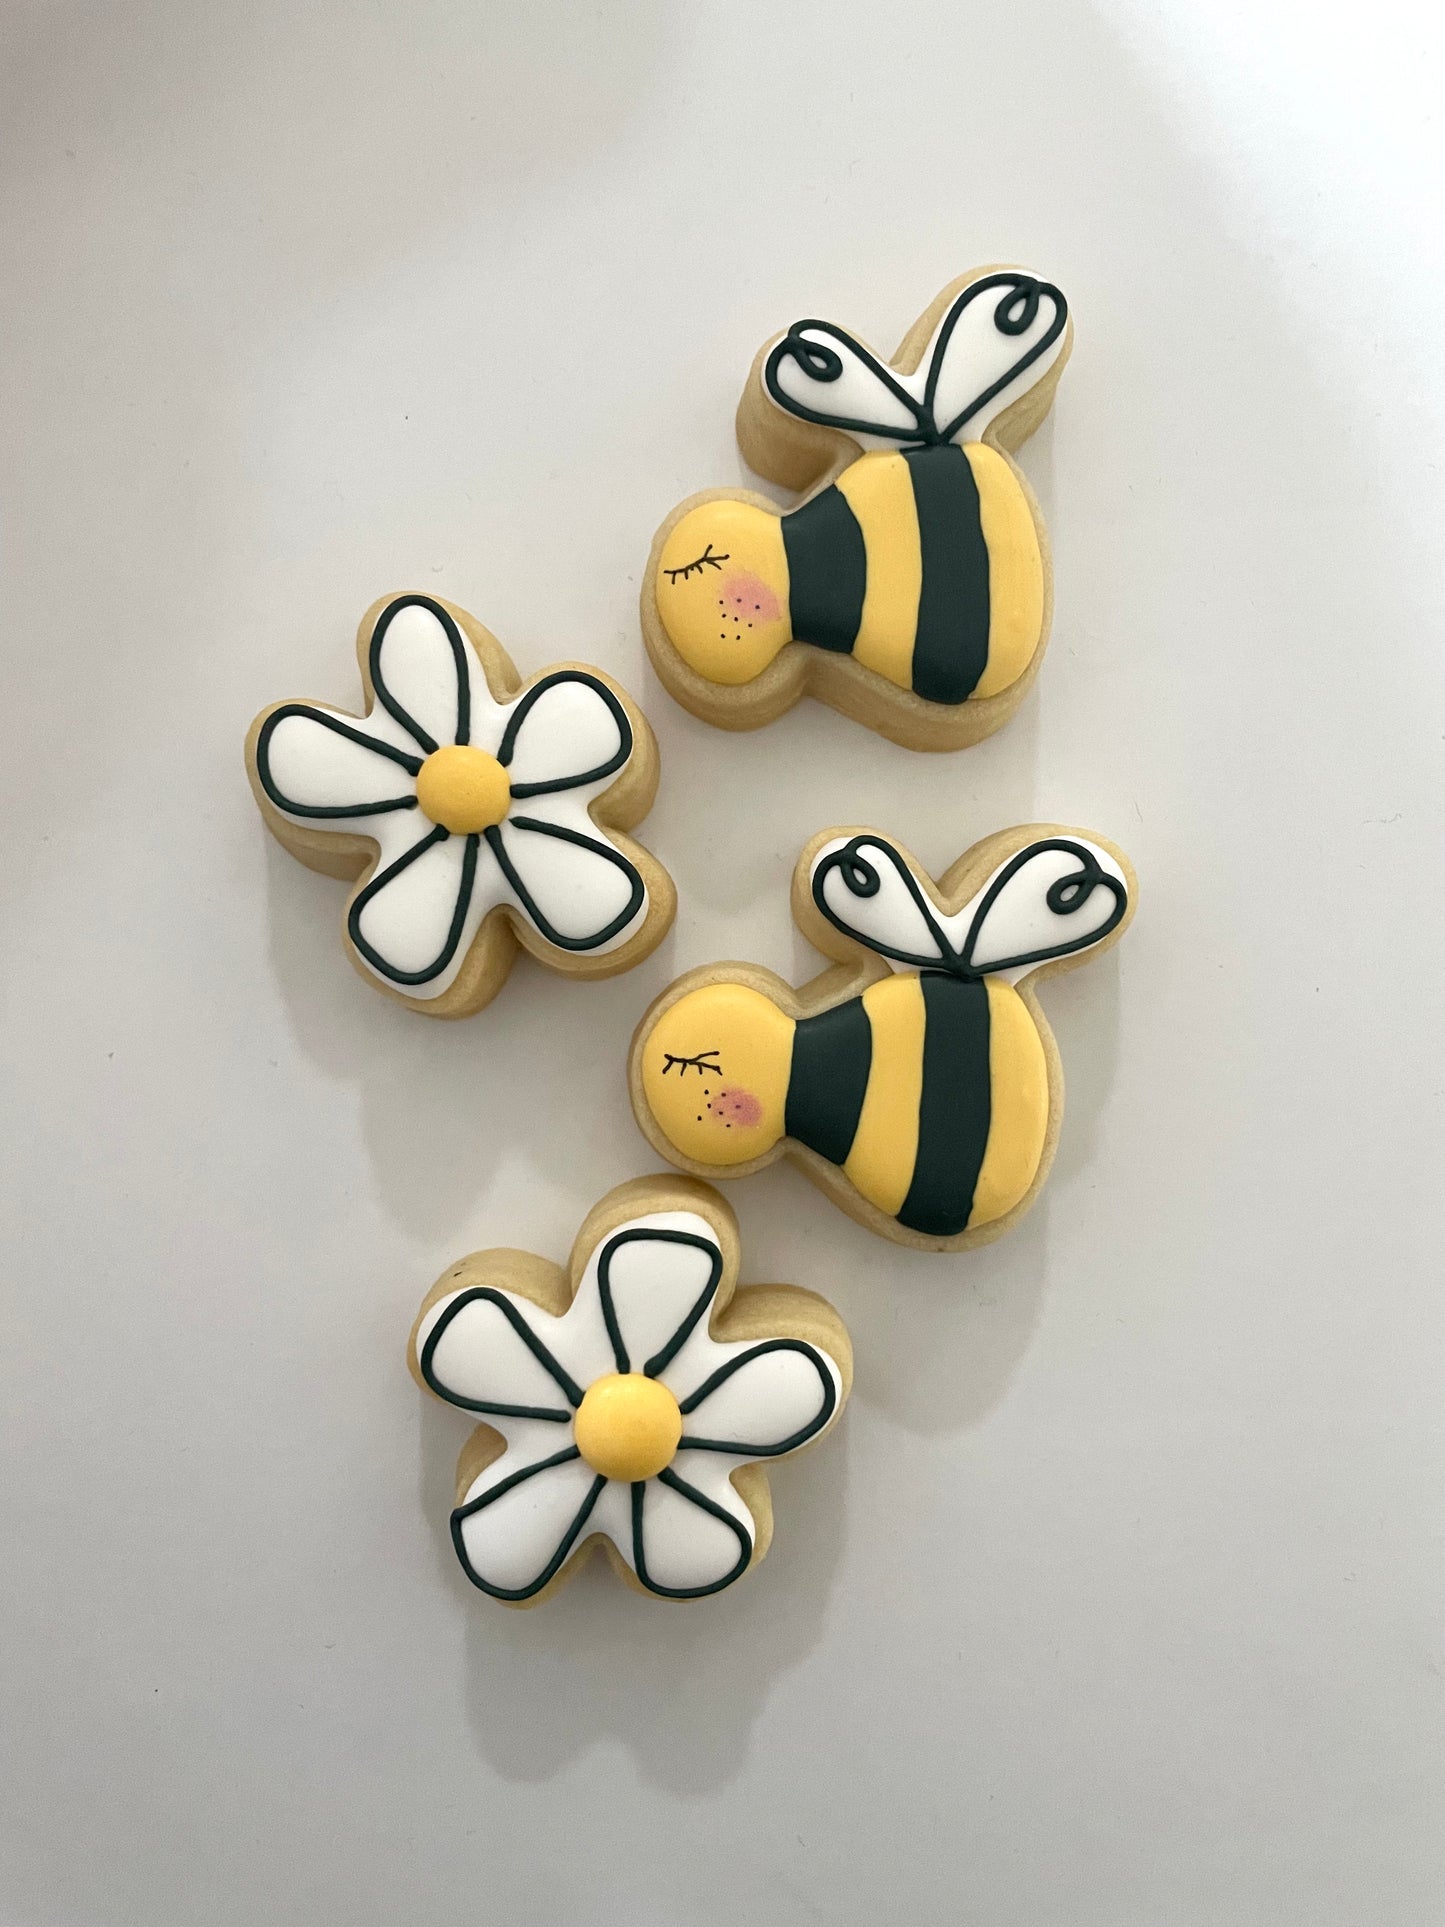 Cartoon Bees and Flowers Mini Cookies